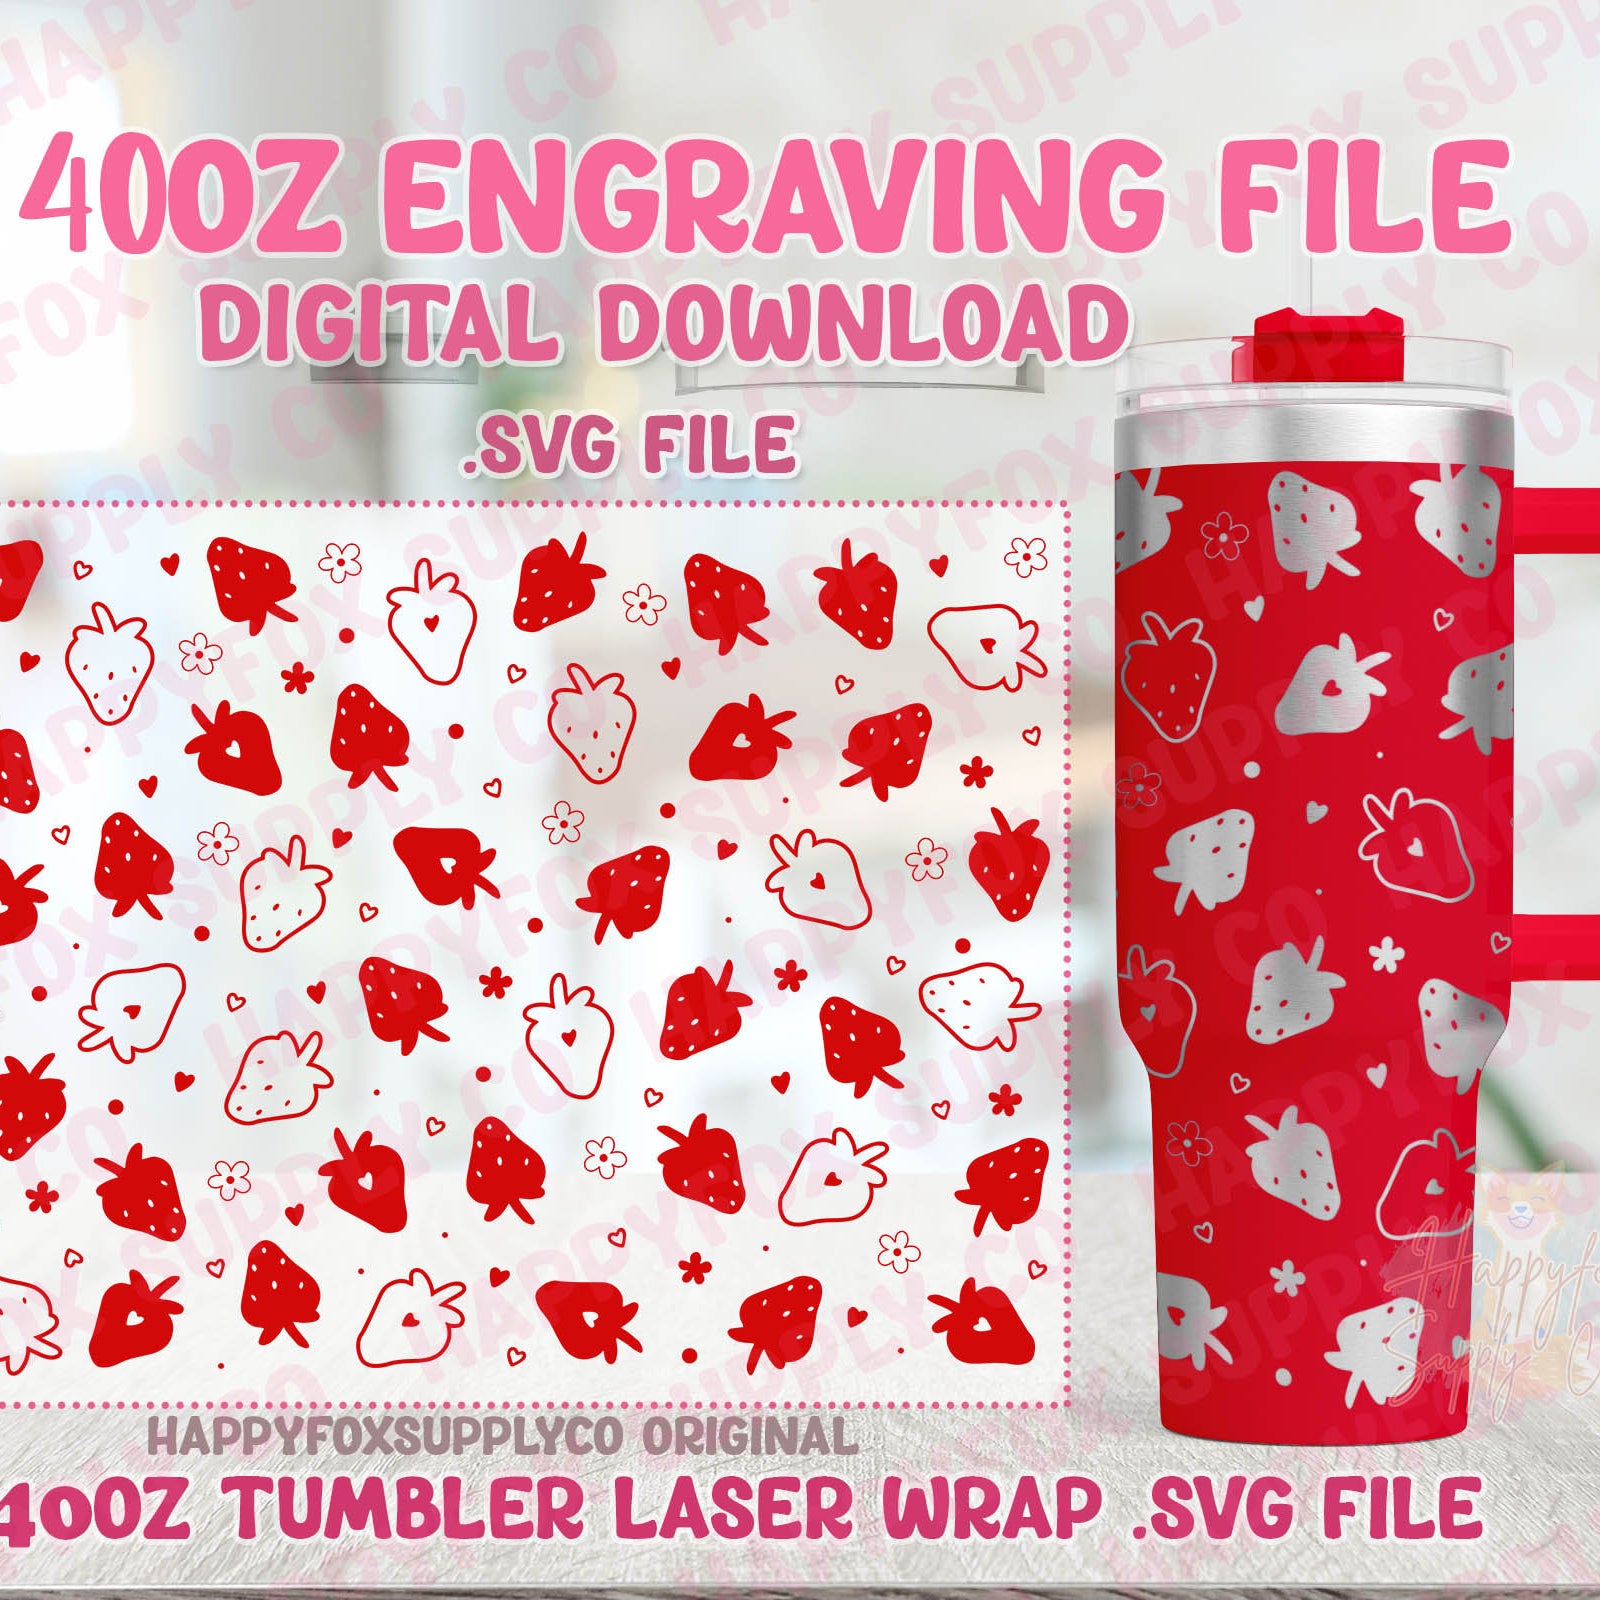 40oz Engraving .SVG File for Lasers Laser Engraved Tumbler Wrap Strawberries Flowers Retro Hearts Valentine Boho .SVG Tumbler Wrap